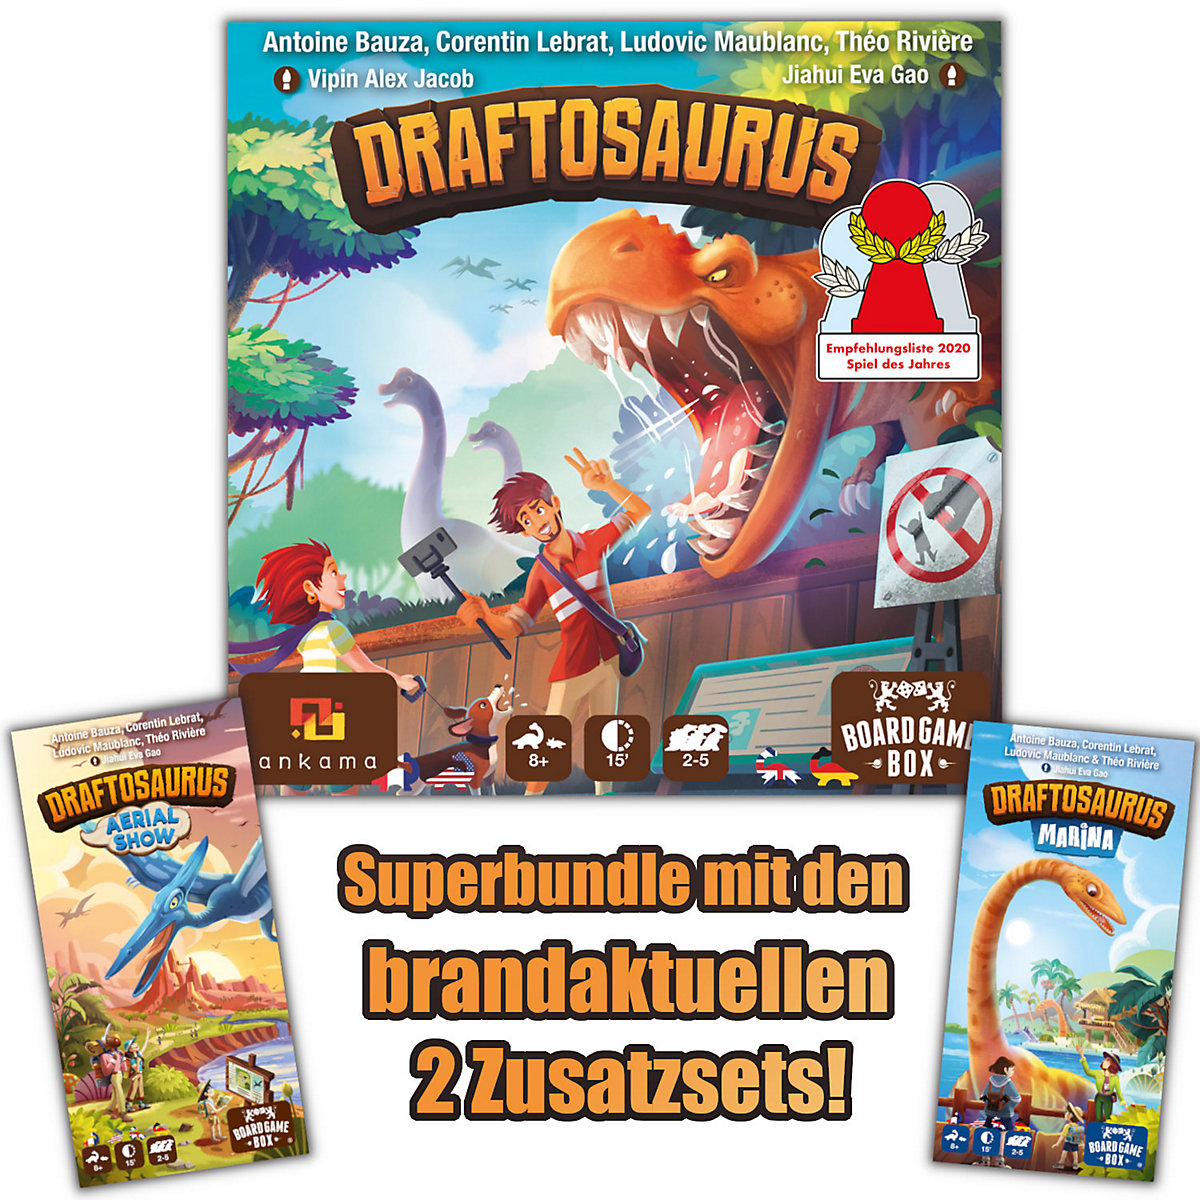 Board Game Box Draftosaurus + 2 Erweiterungen (Aerial Show + Marina)